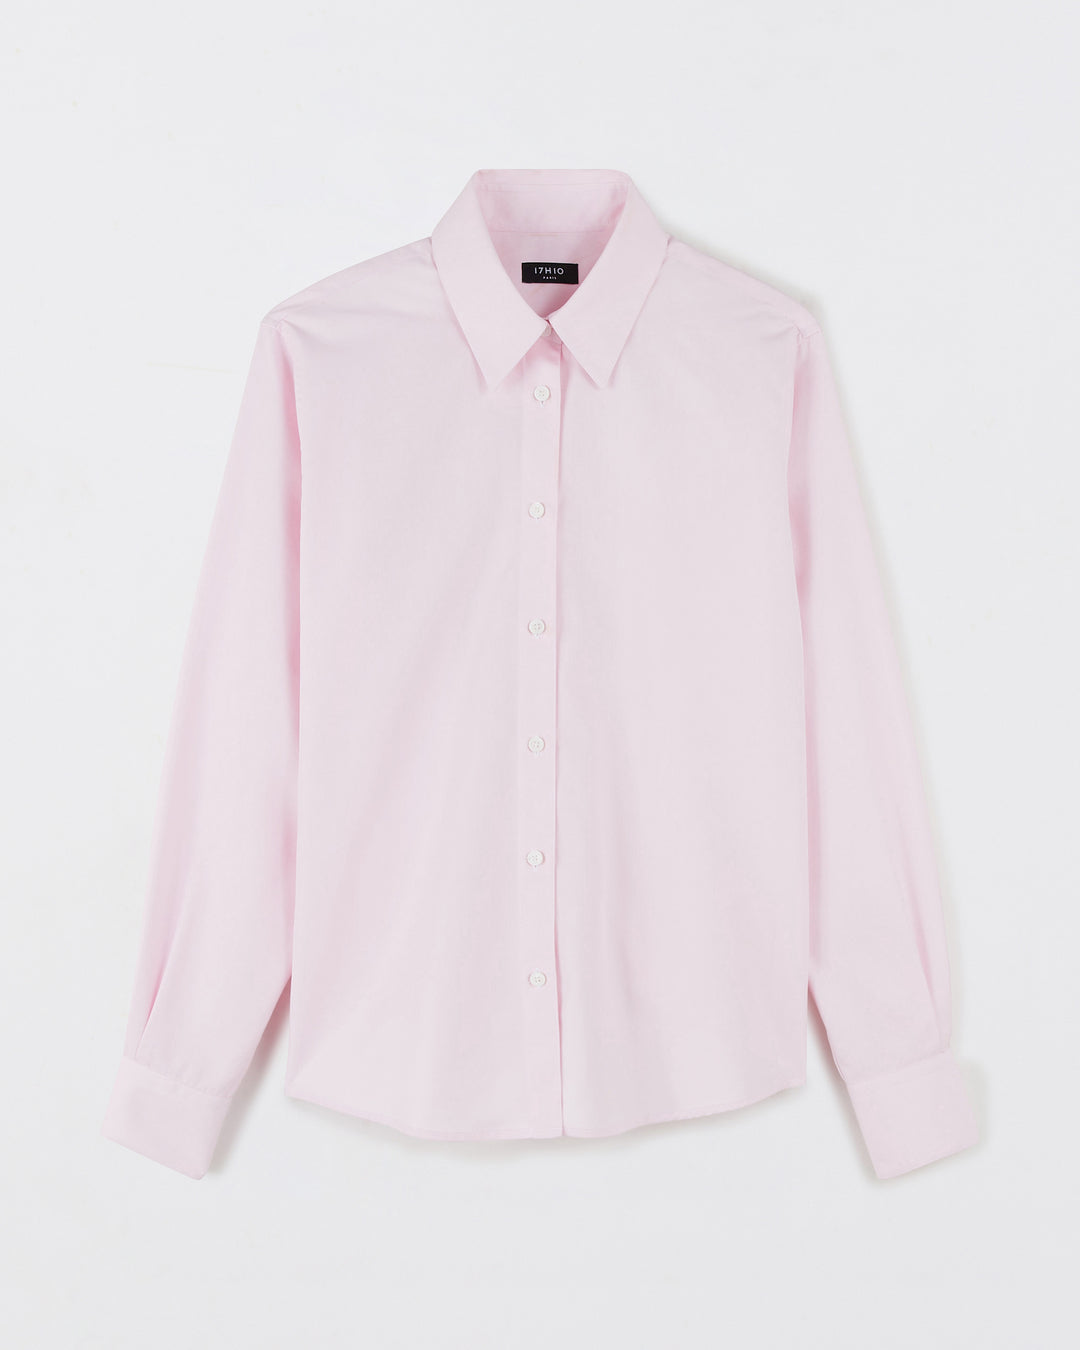 Hudson shirt - Pale pink